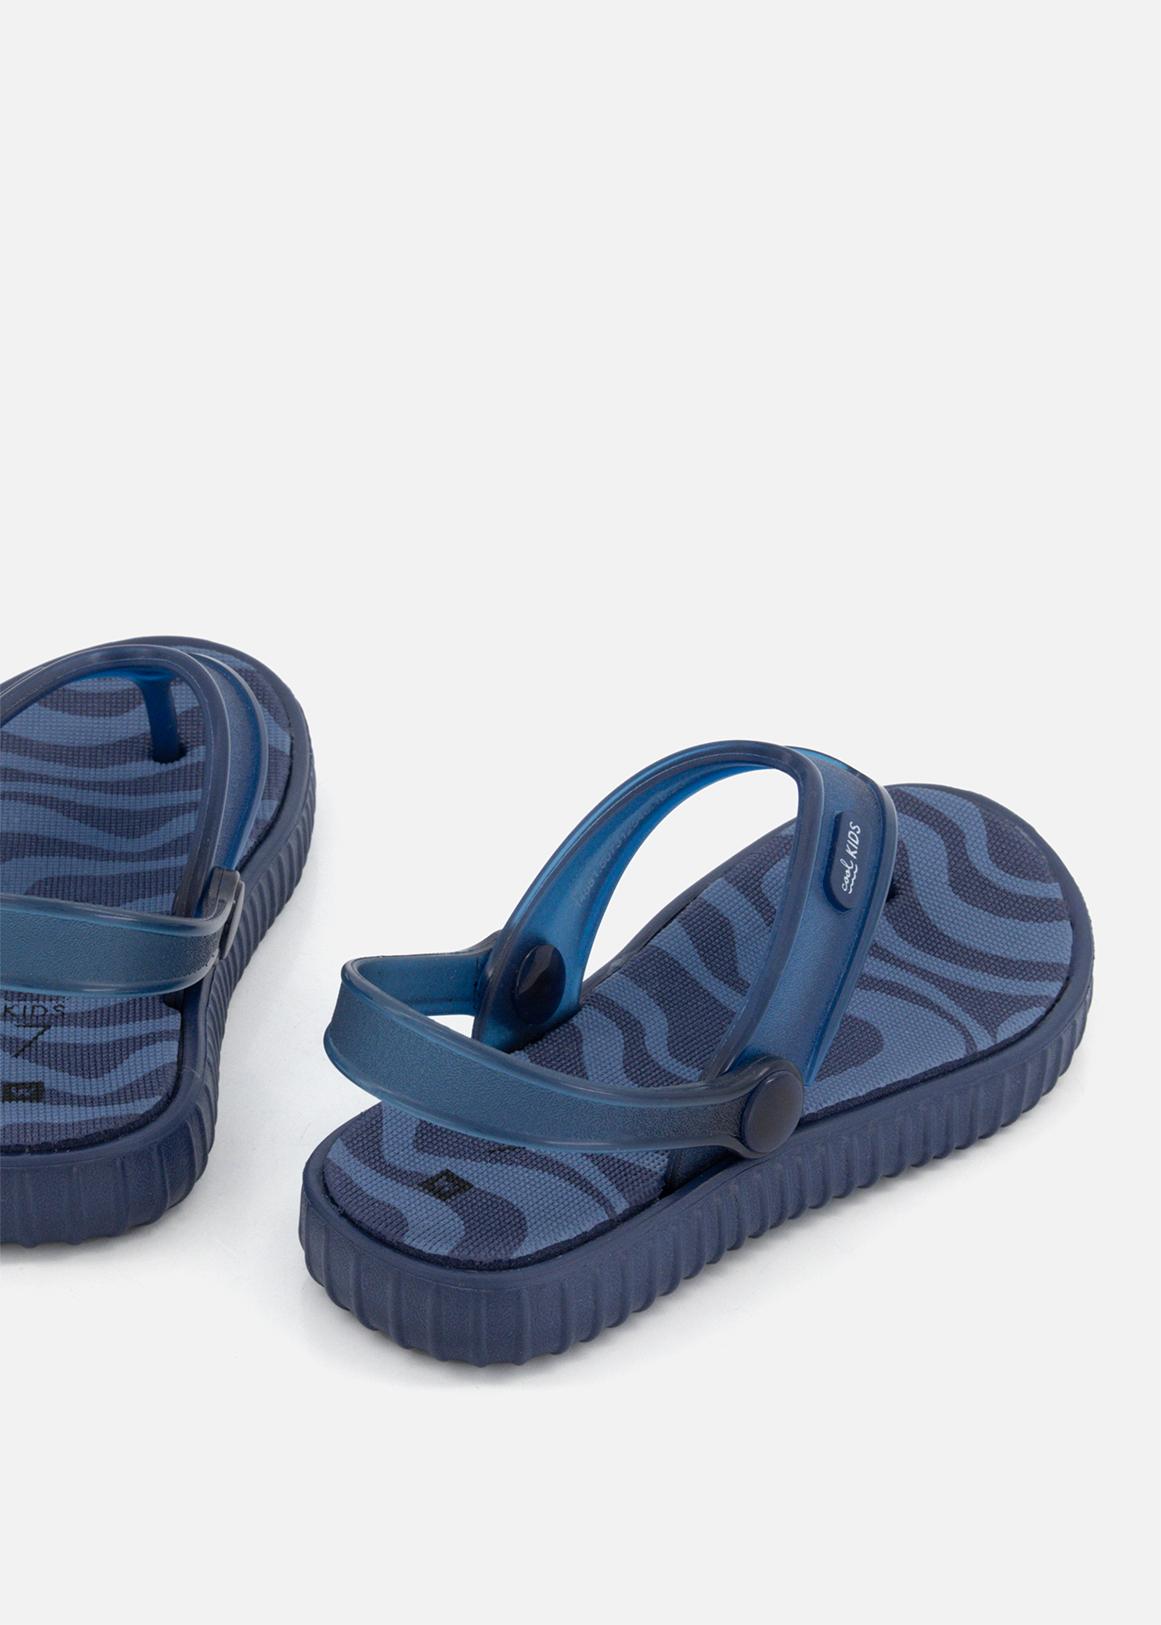 Unisex Children's Summer Pool Beach Sandal Slide Flip Flop Size 13